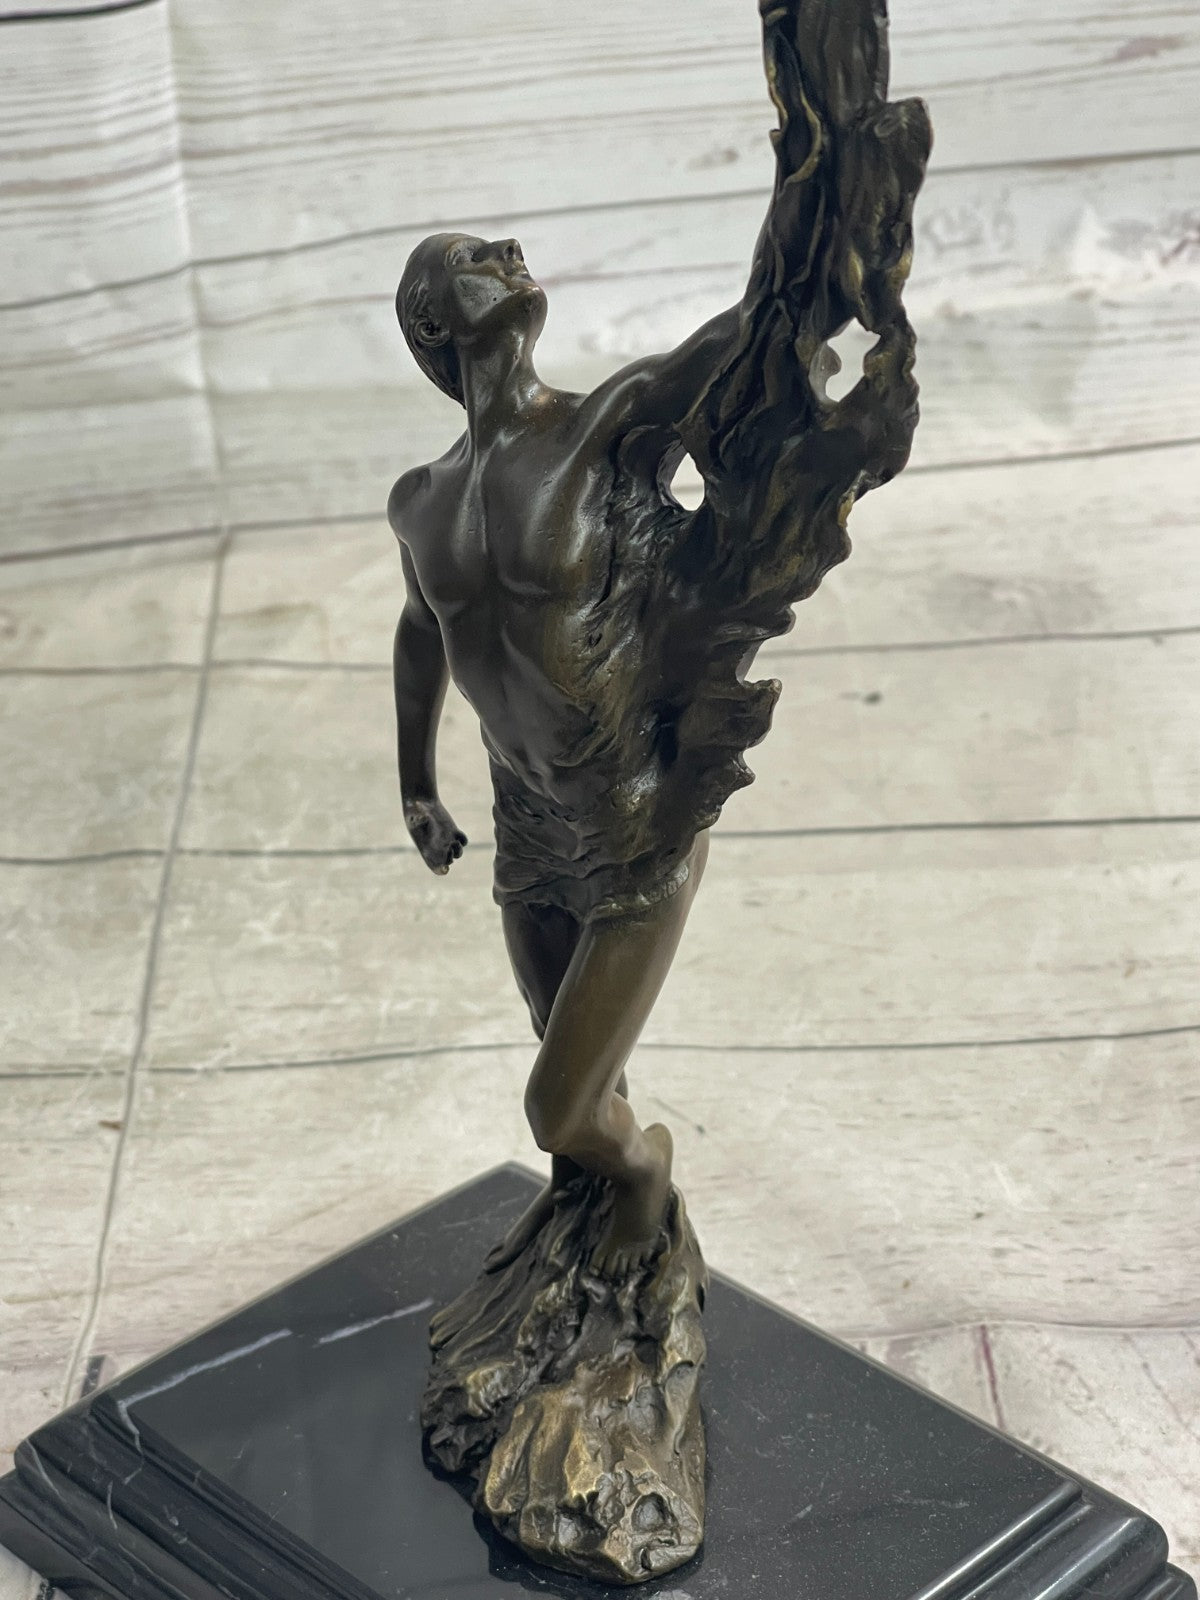 Aldo Vitaleh Prima Ballerina Bronze Sculpture Art Deco Marble Base Figurine Gift